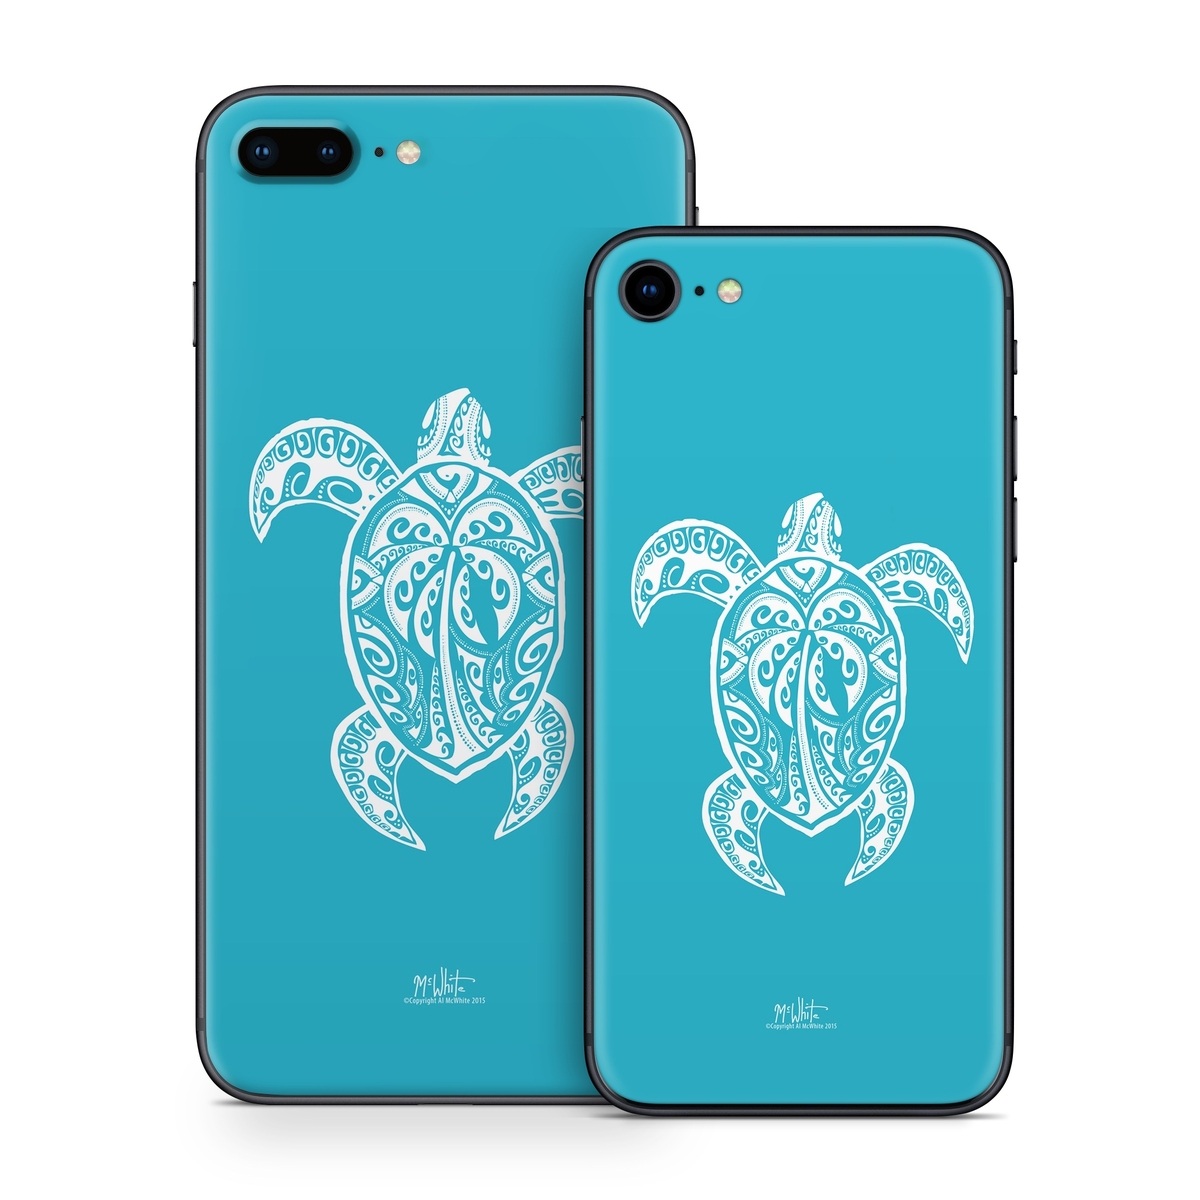 iPhone 8 Series Skin design of Sea turtle, Turtle, Green sea turtle, Reptile, Illustration, with blue, white colors